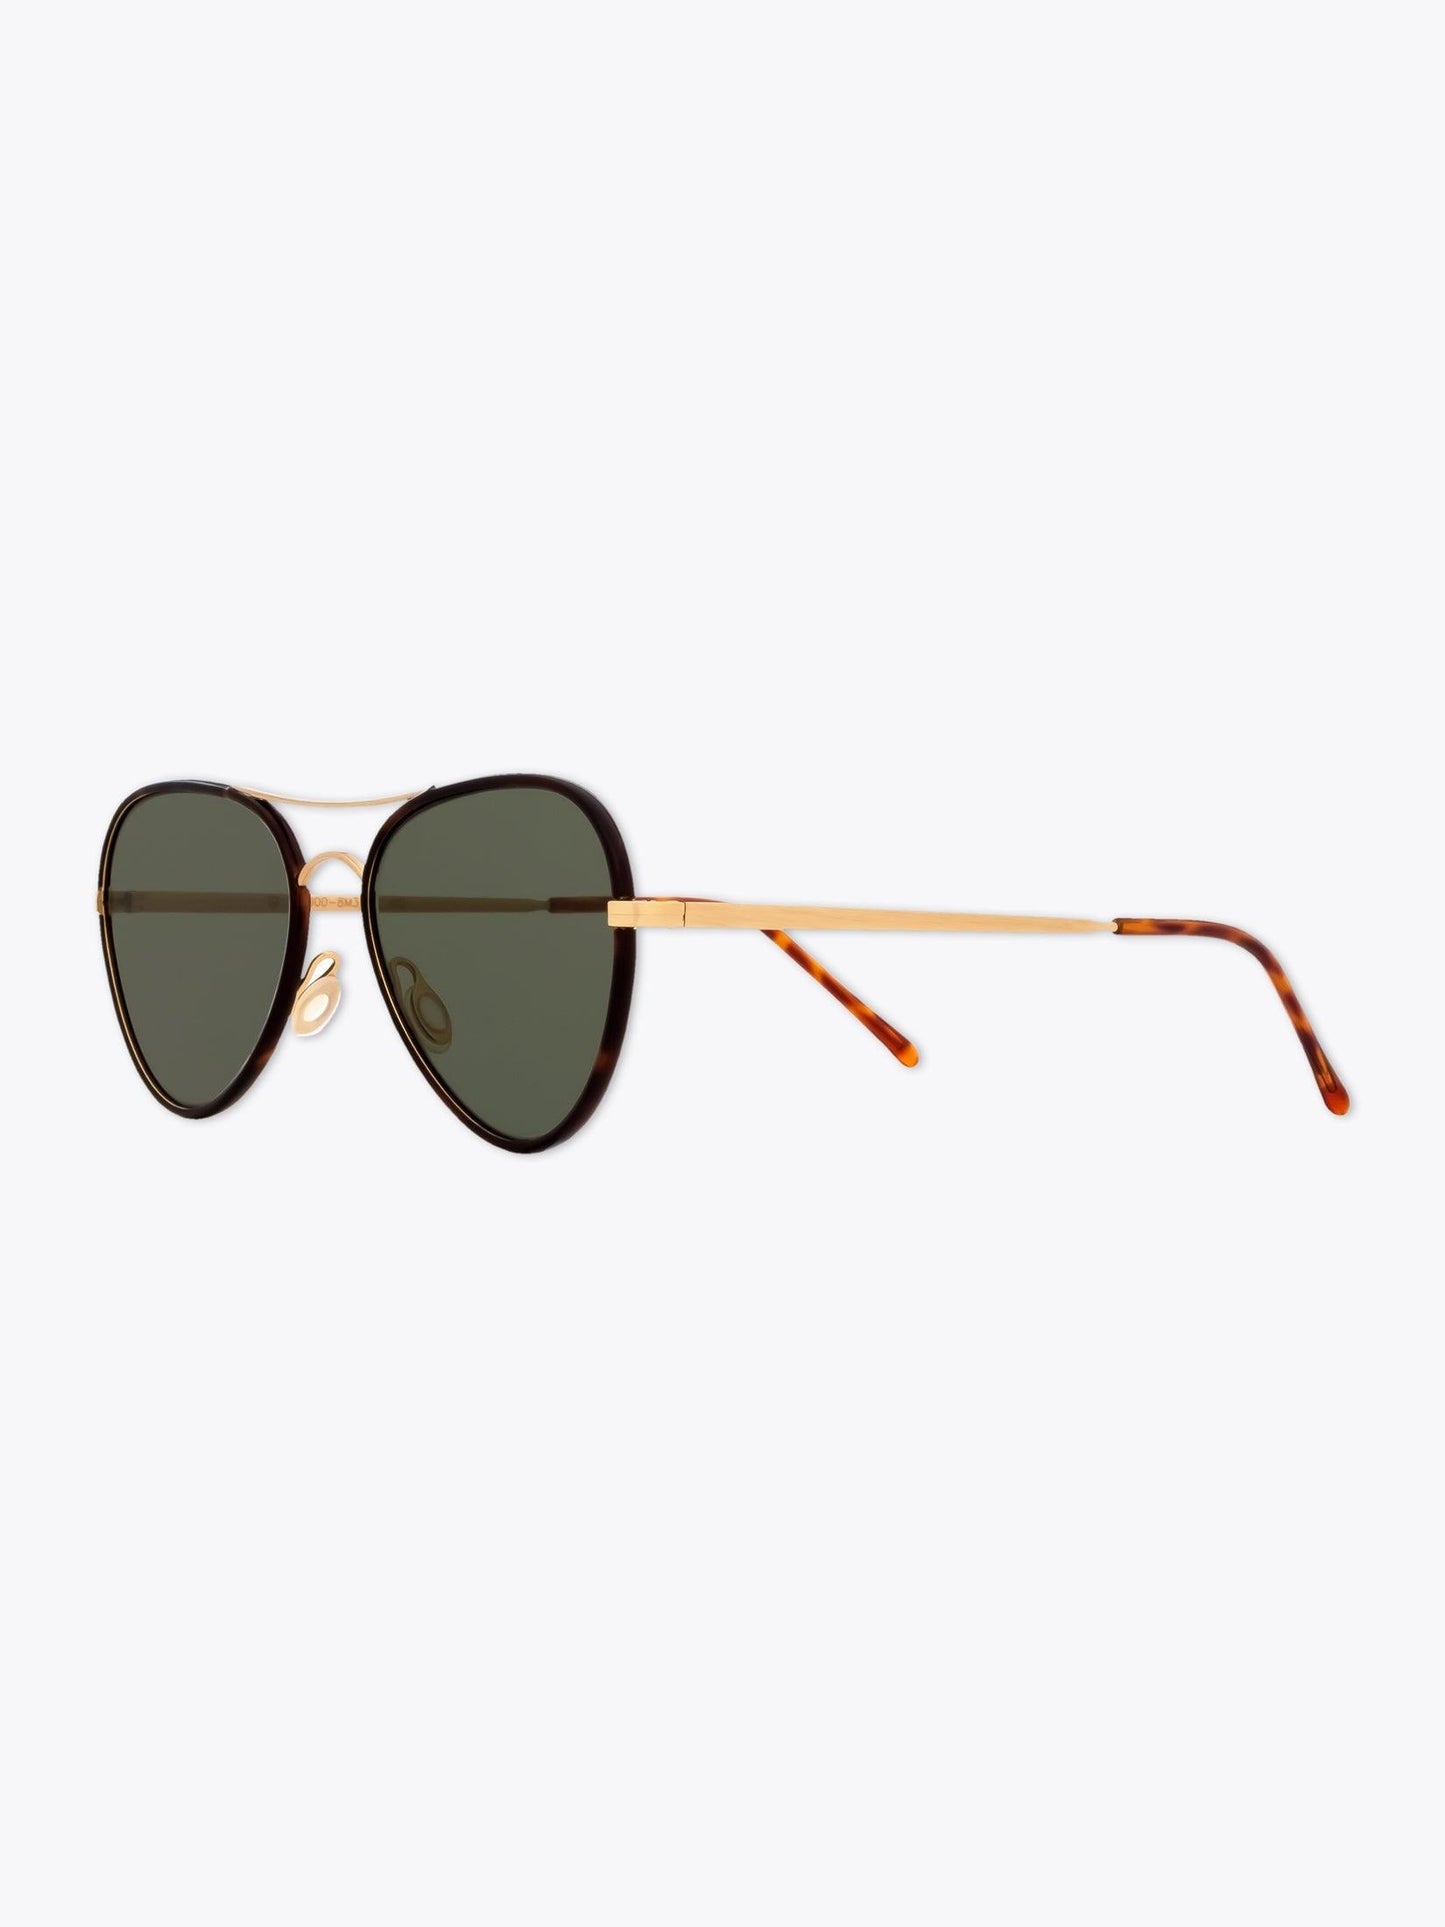 8000 Eyewear 8M3/P Gold Triangle Sunglasses - Apodep.com